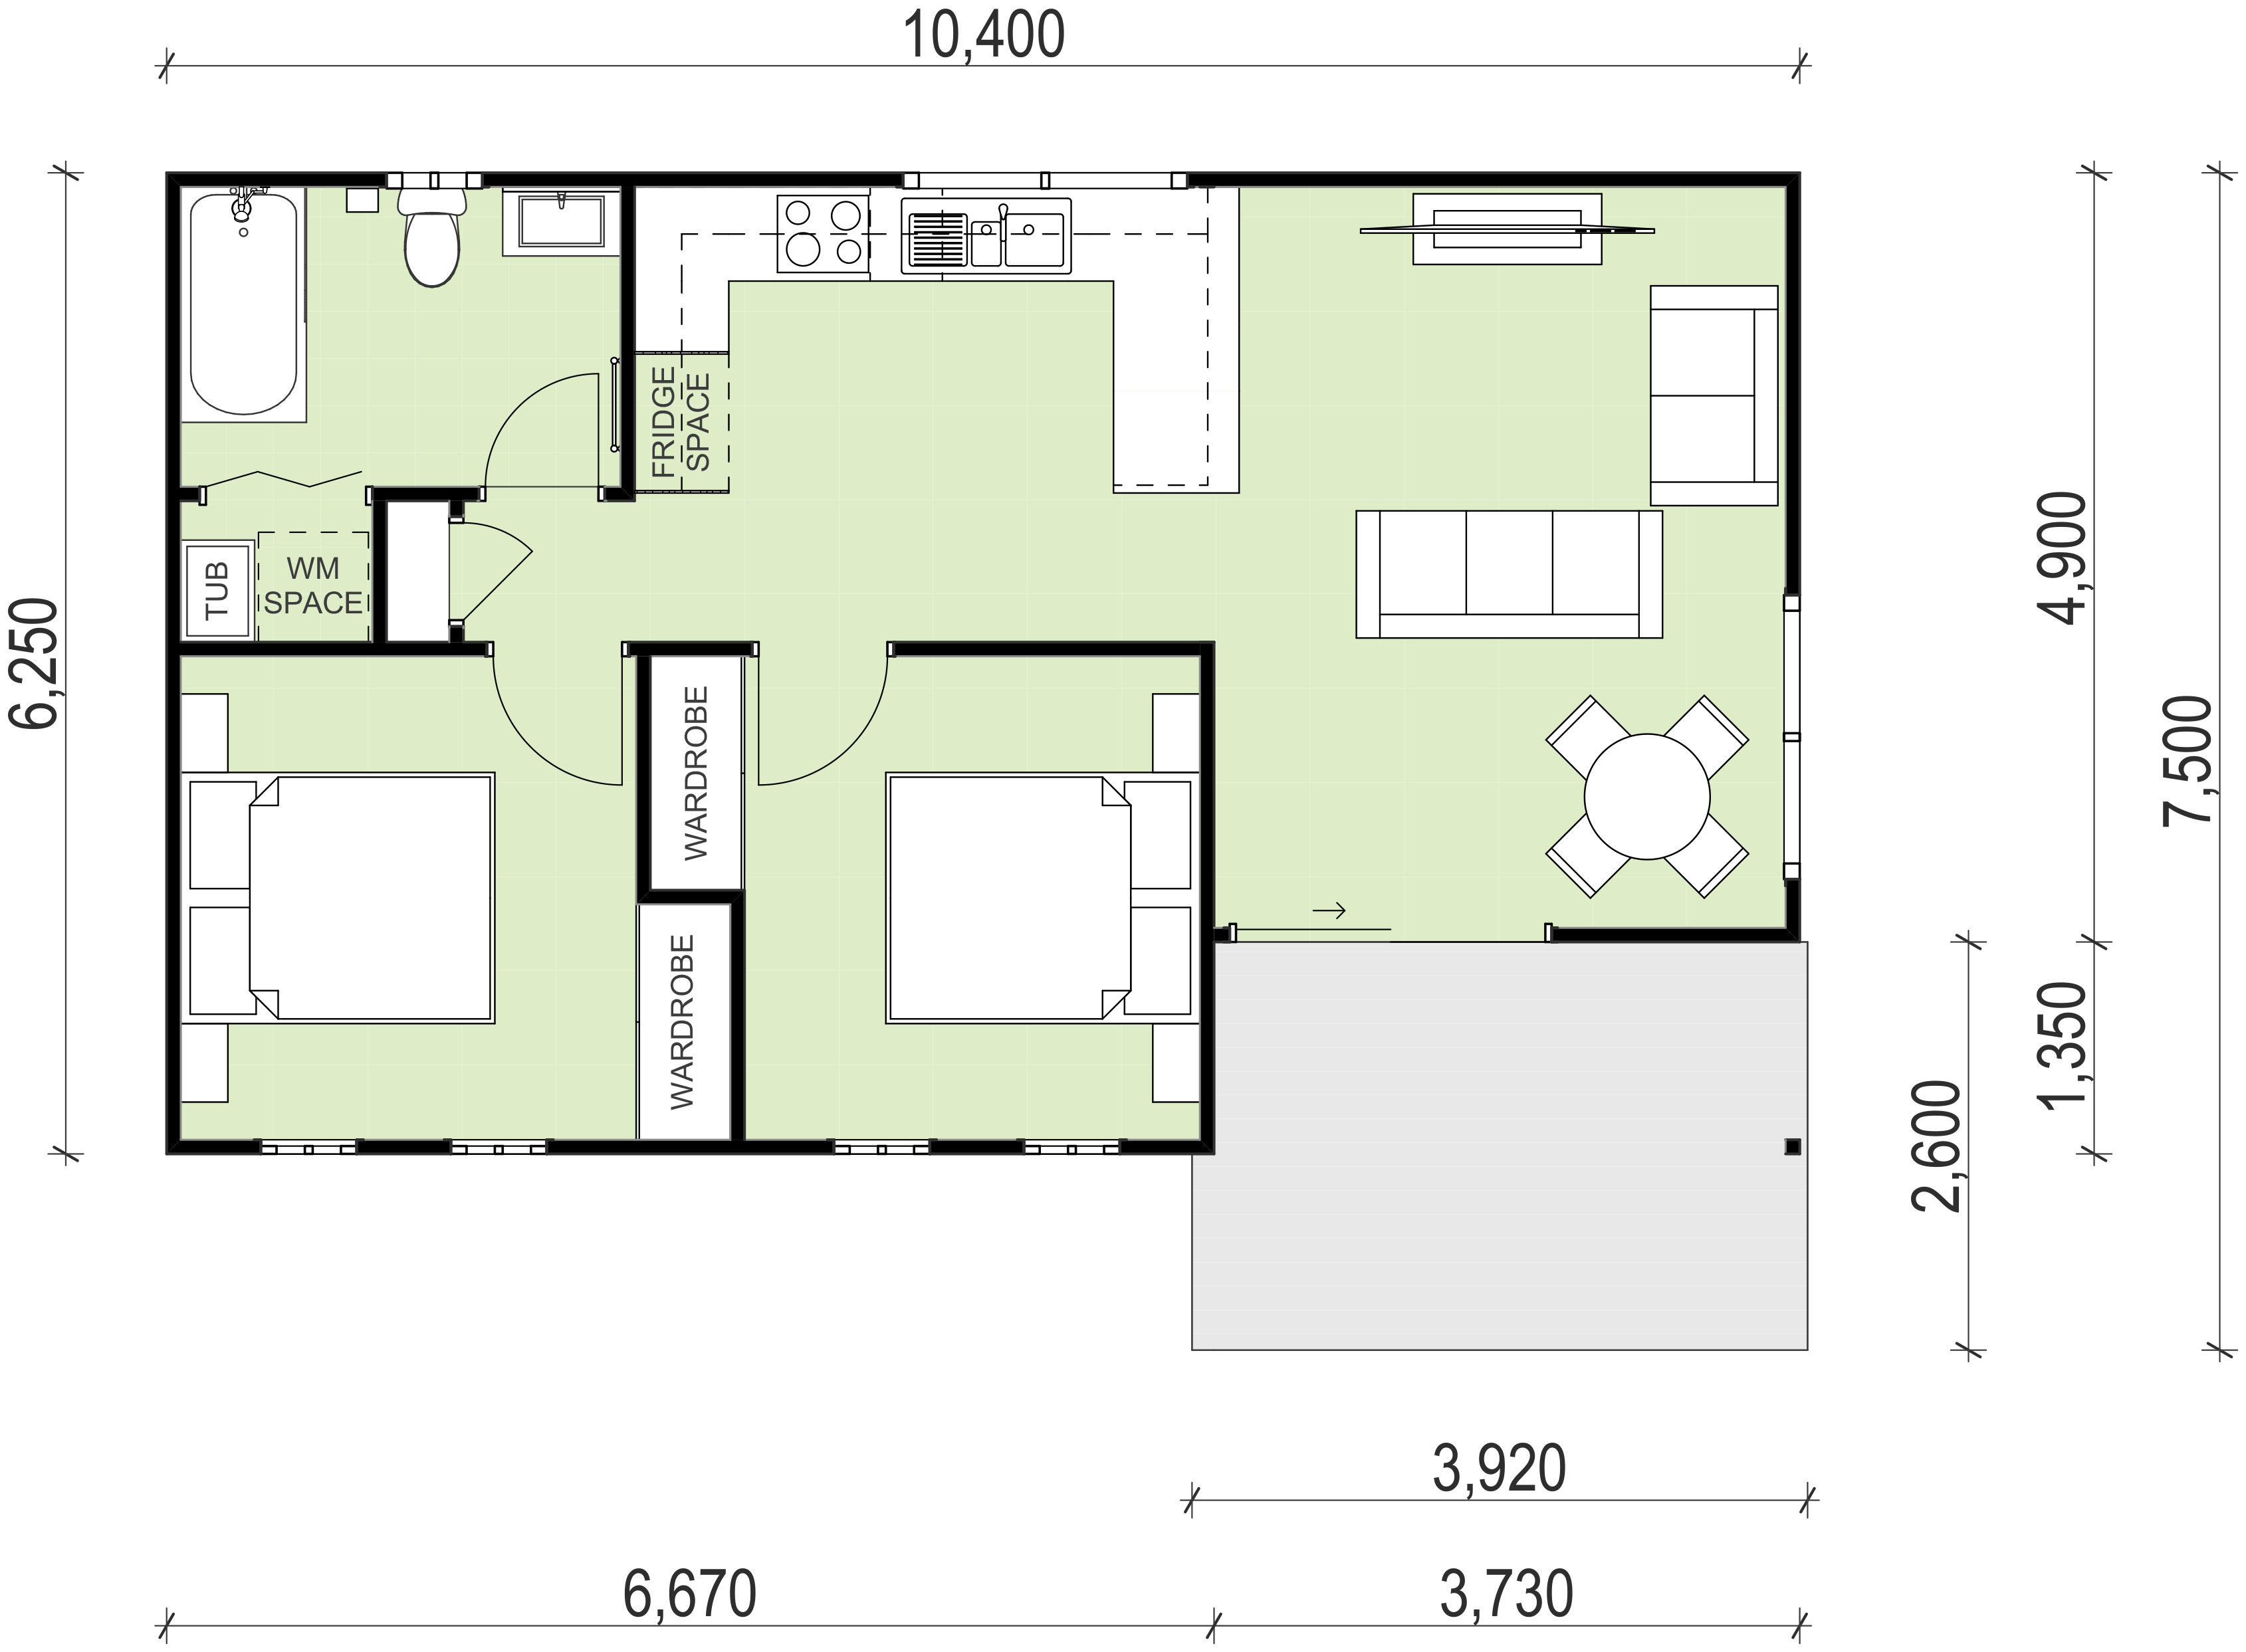 granny flat floor plan design 10400x7500